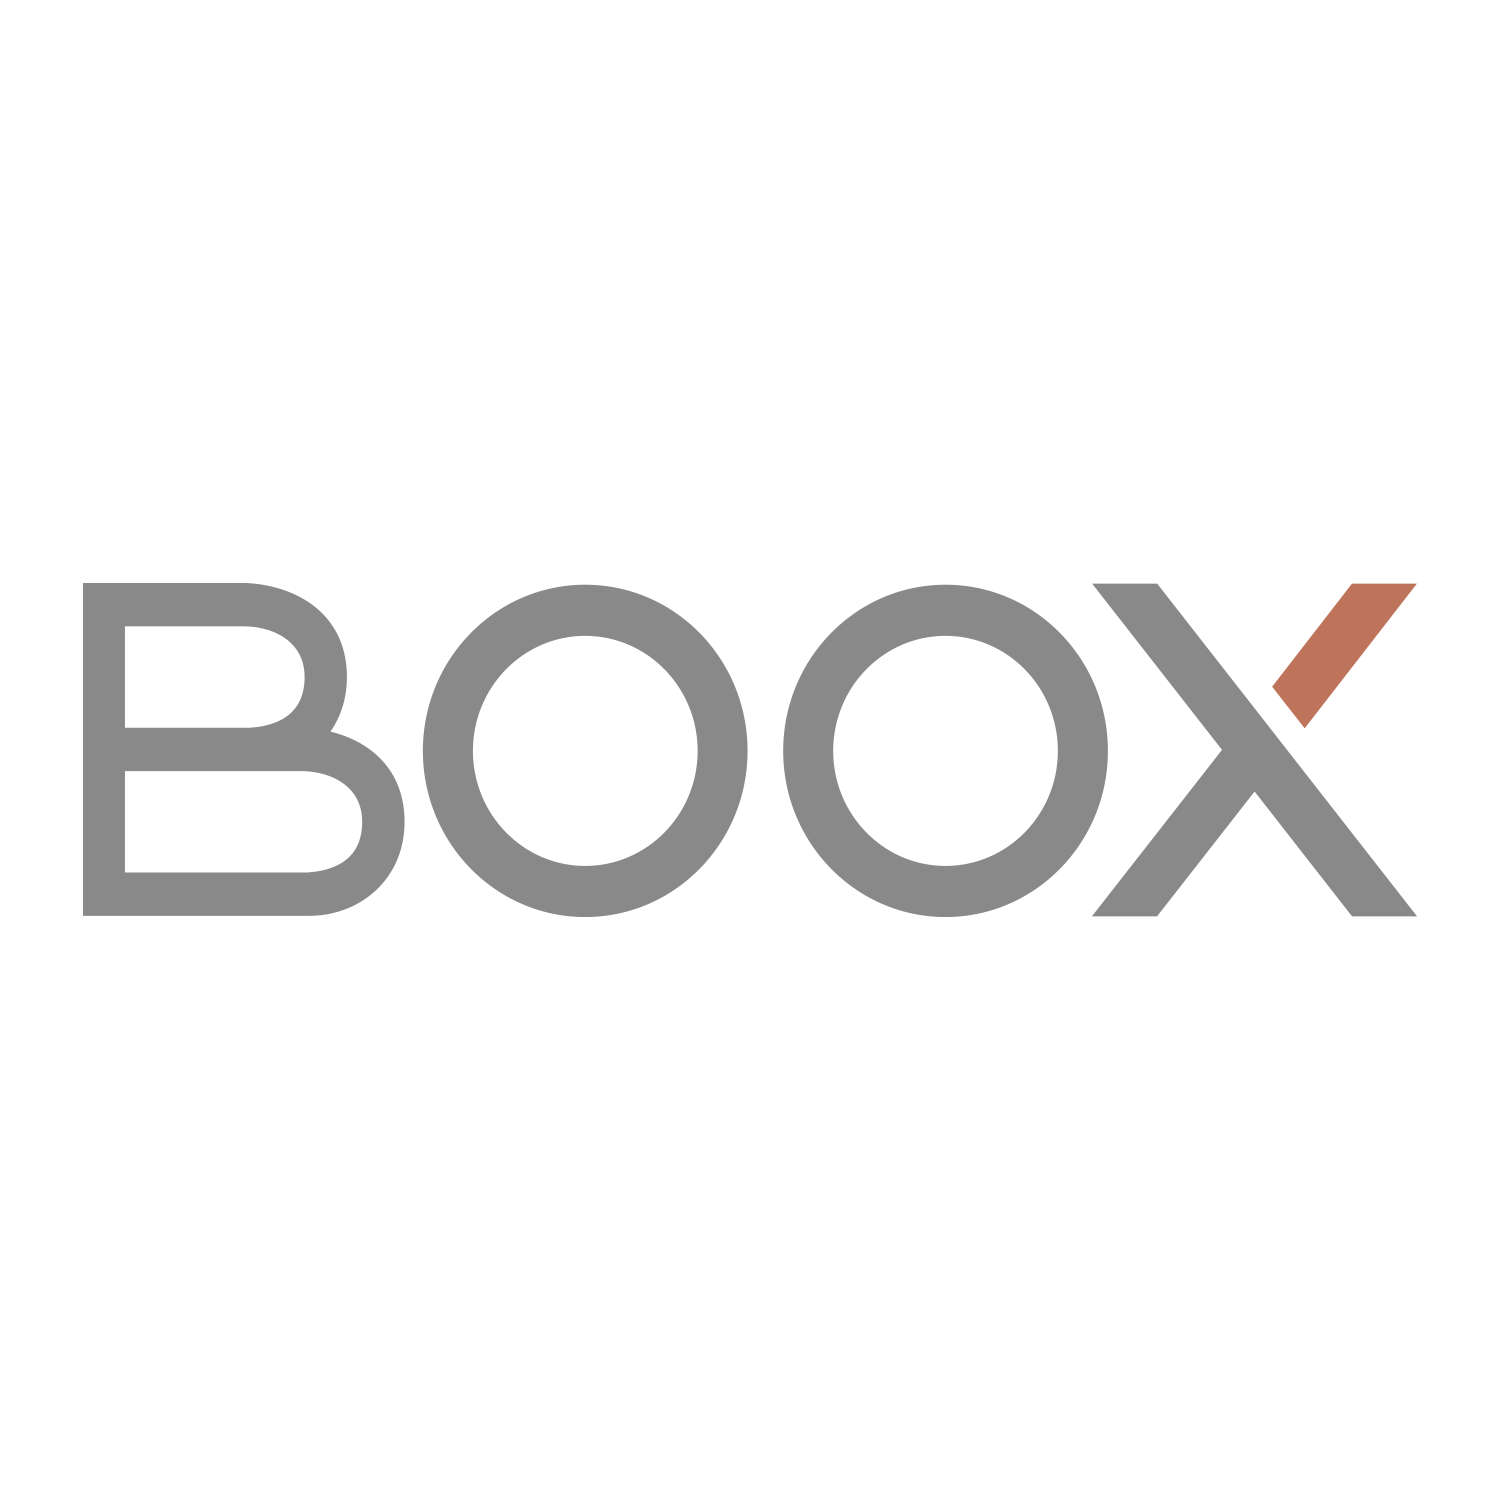 Boox page. Боокс. Booxing logo.